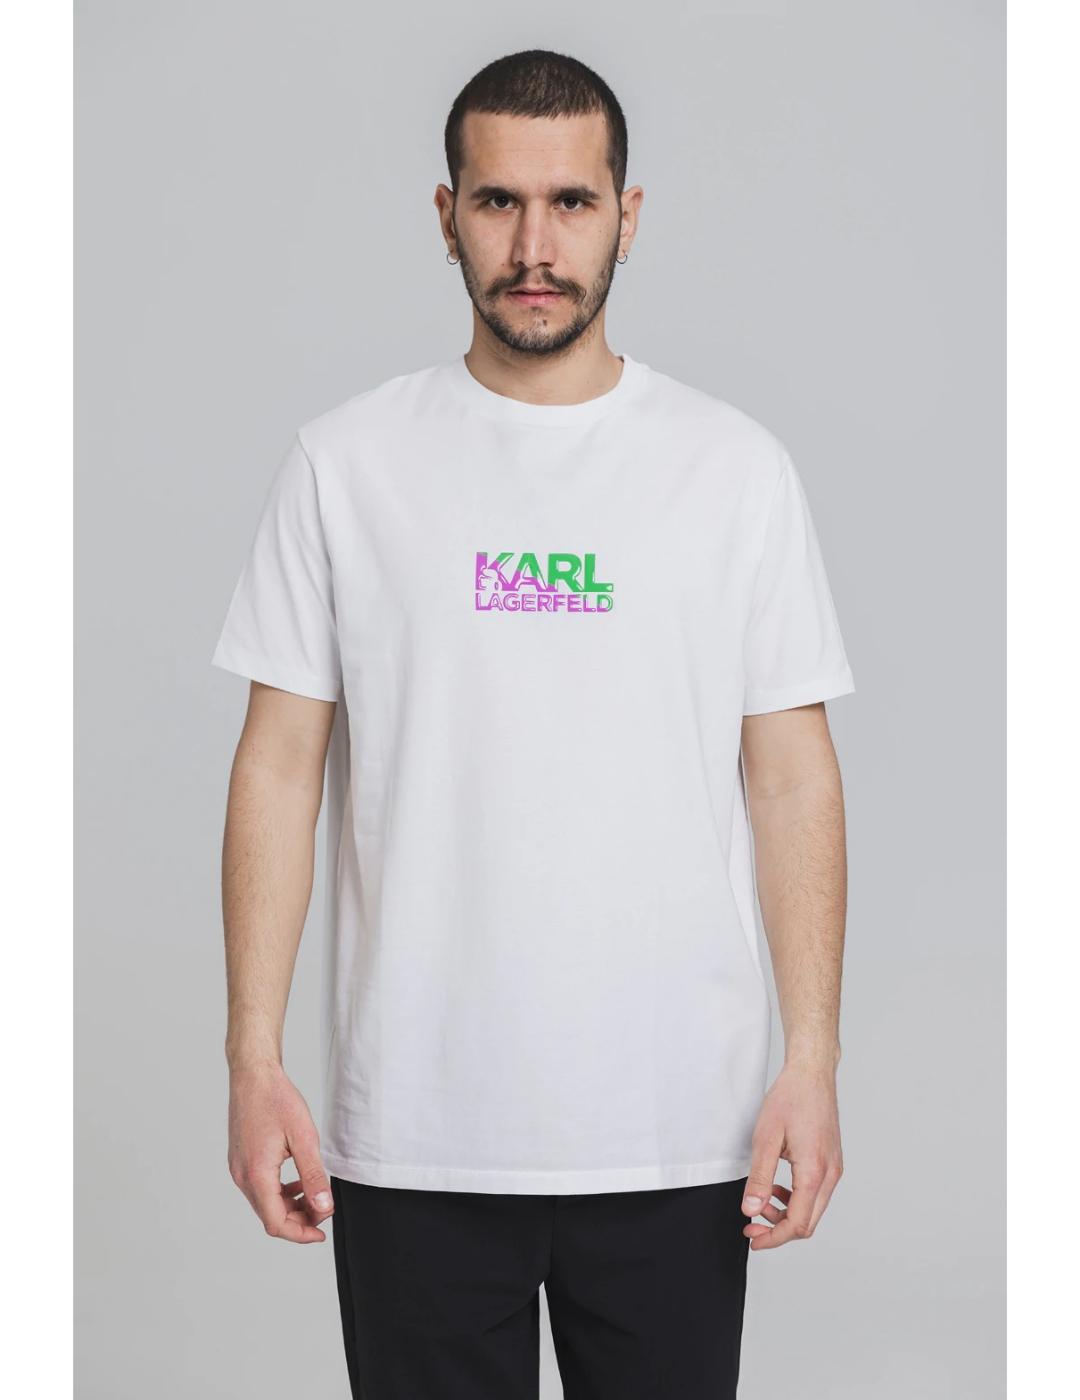 Camiseta Karl Lagerfeld bicolor blanca para hombre